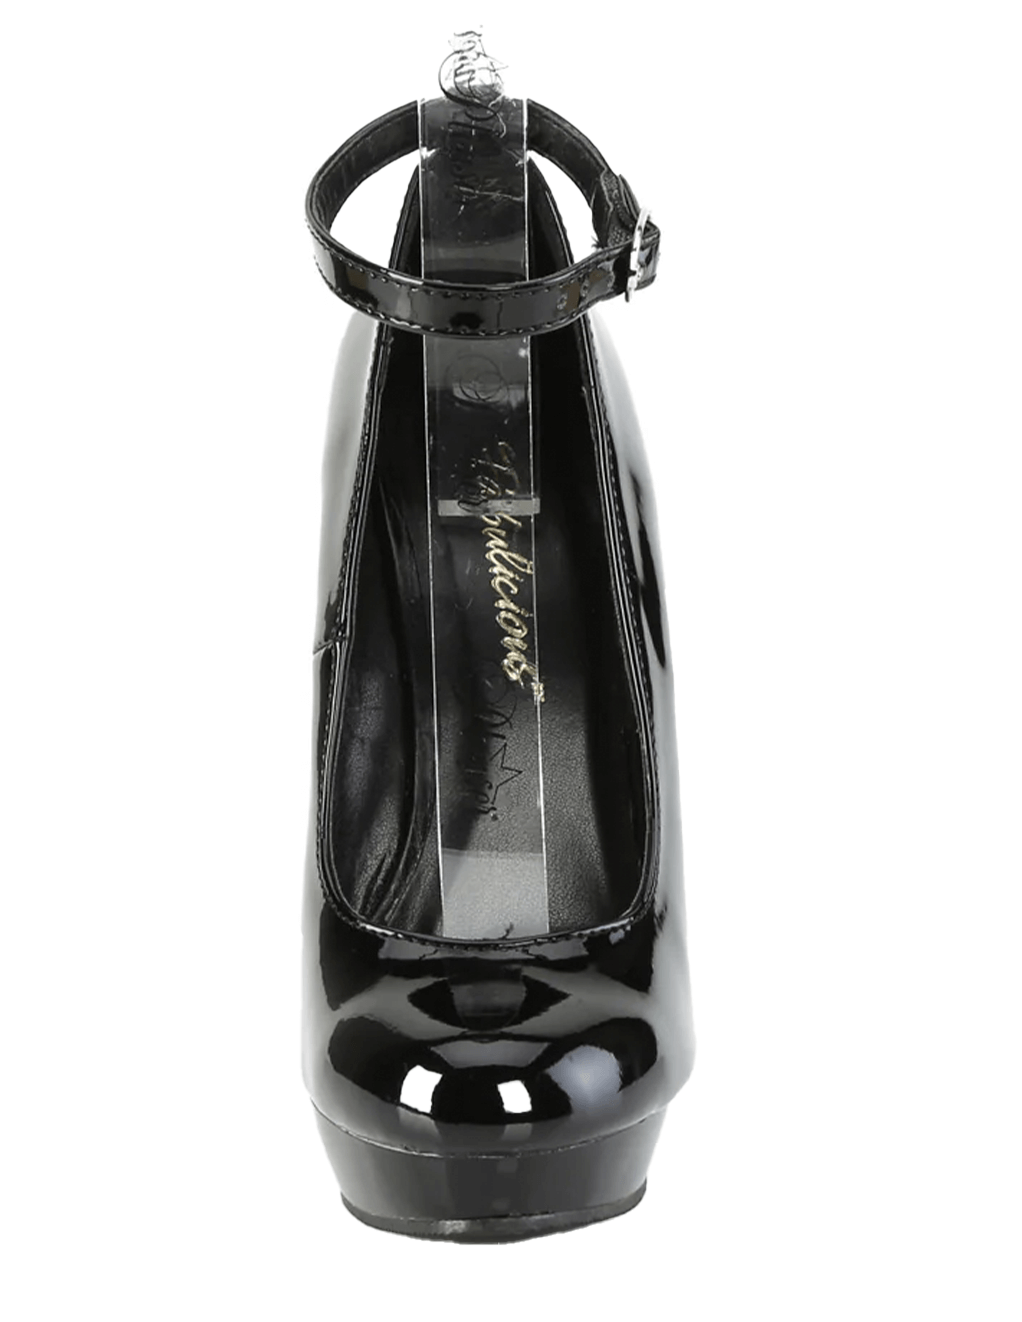 Sultry-686 Ankle Strap Platform Pump - Black Patent/Black - Front